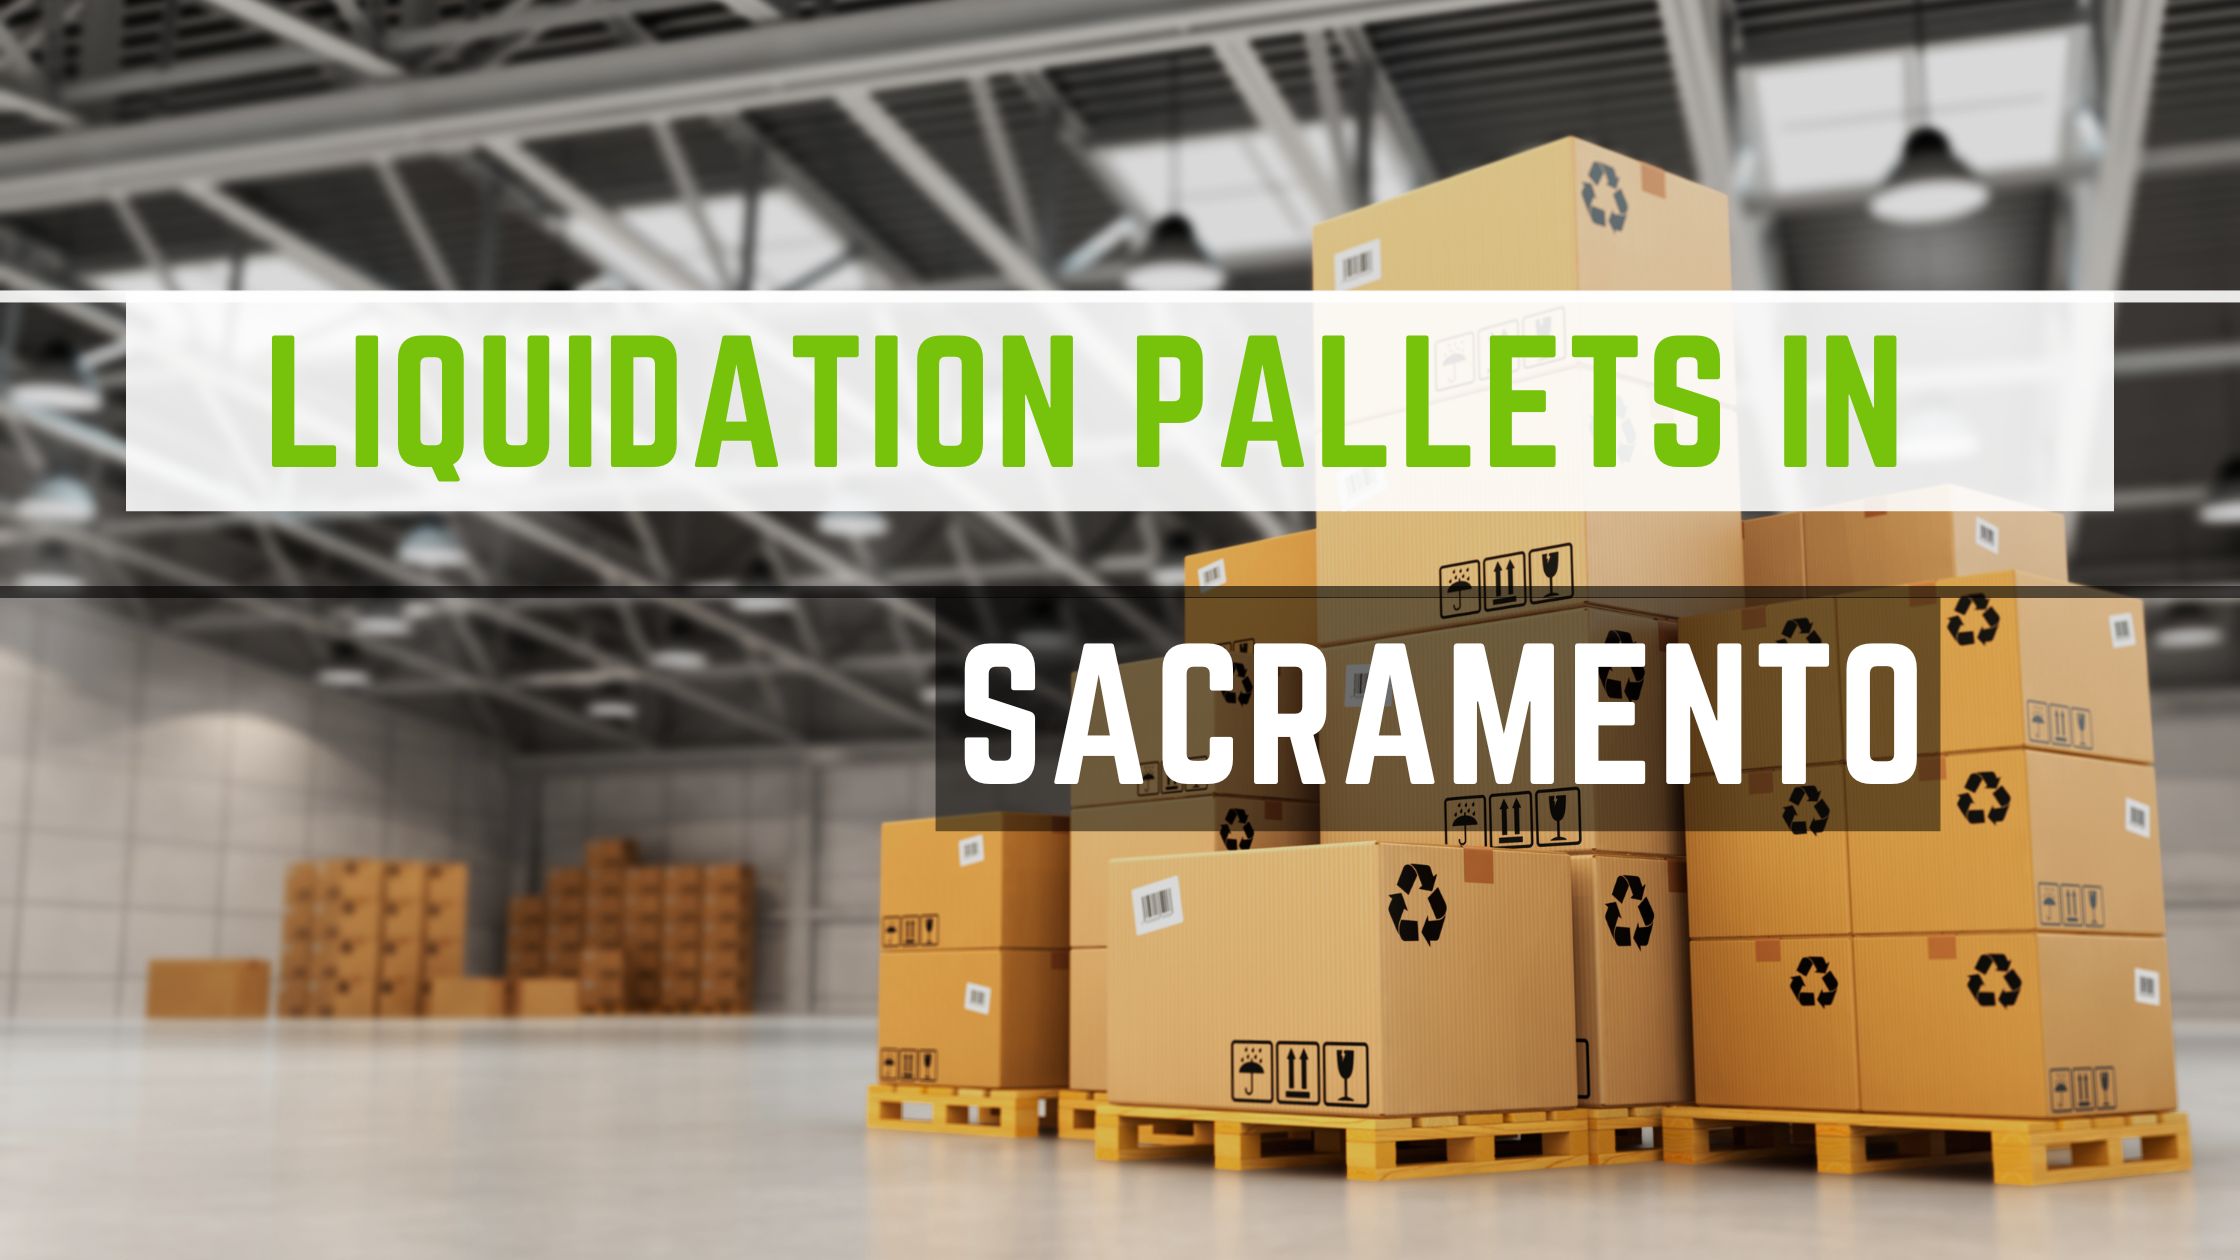 Prime Auctions Sacramento  Purchasing Overstock Pallets